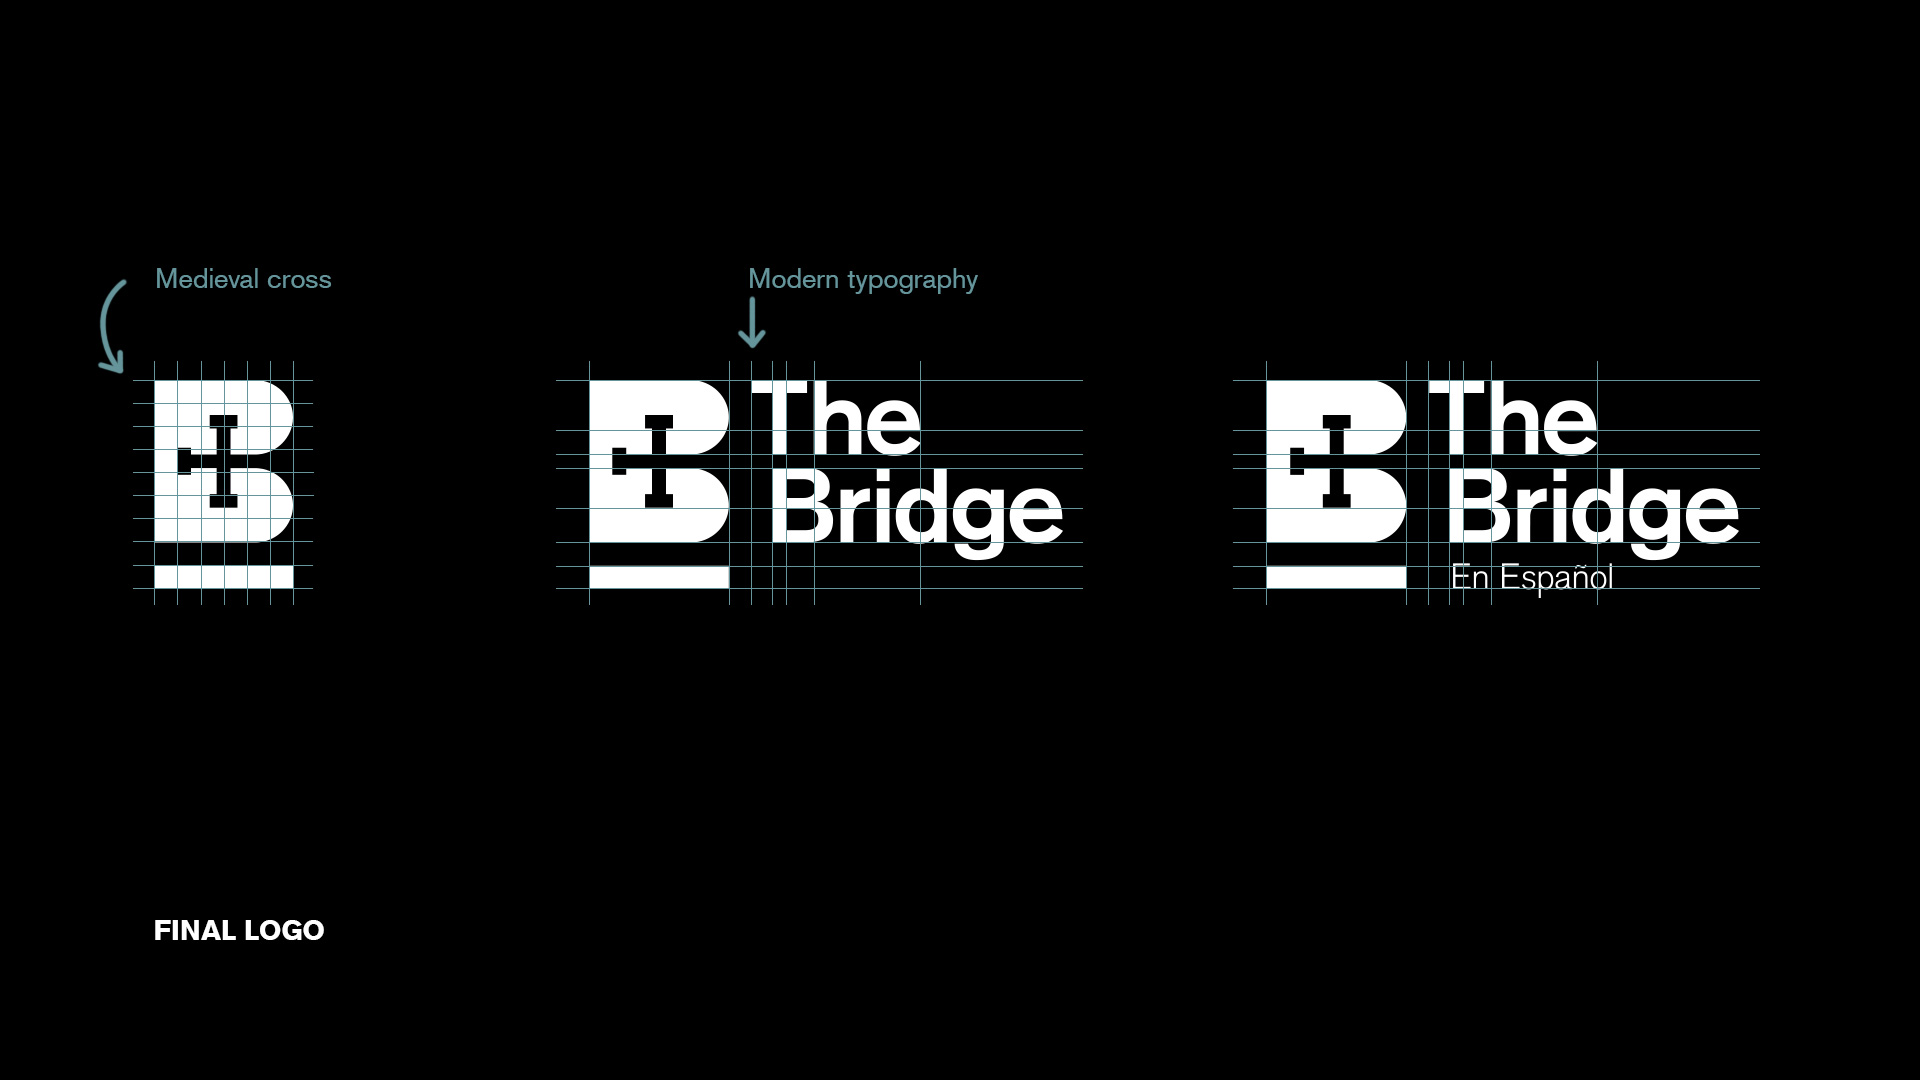 a refined version of the bridge logo